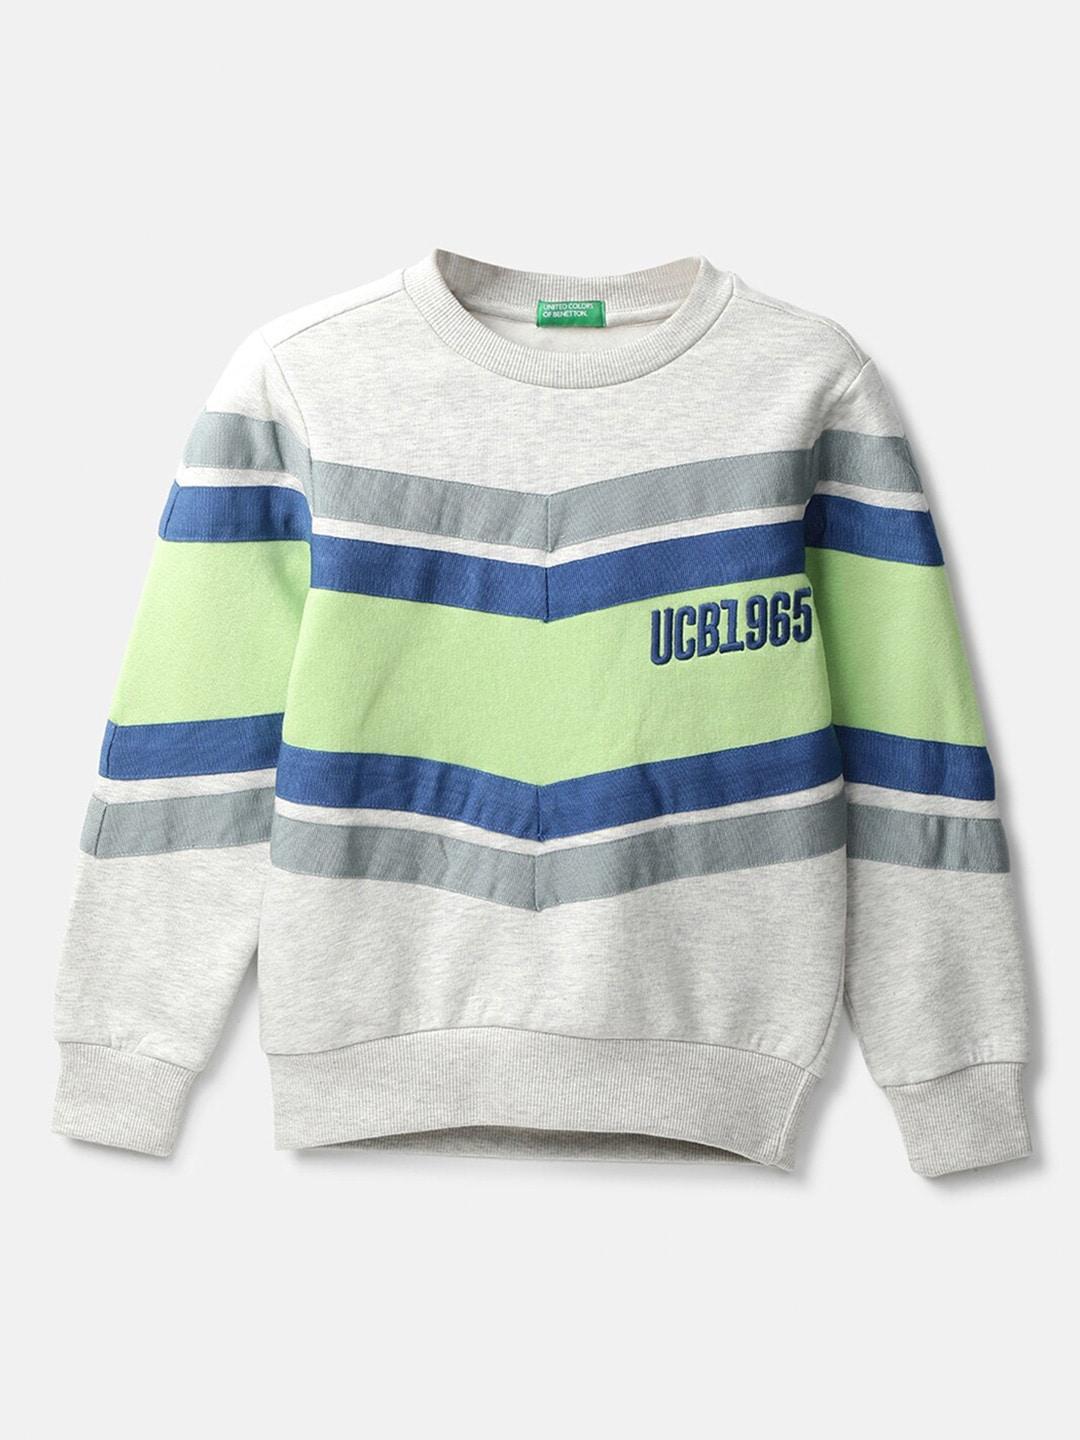 United Colors of Benetton Boys Grey Striped Sweatshirt